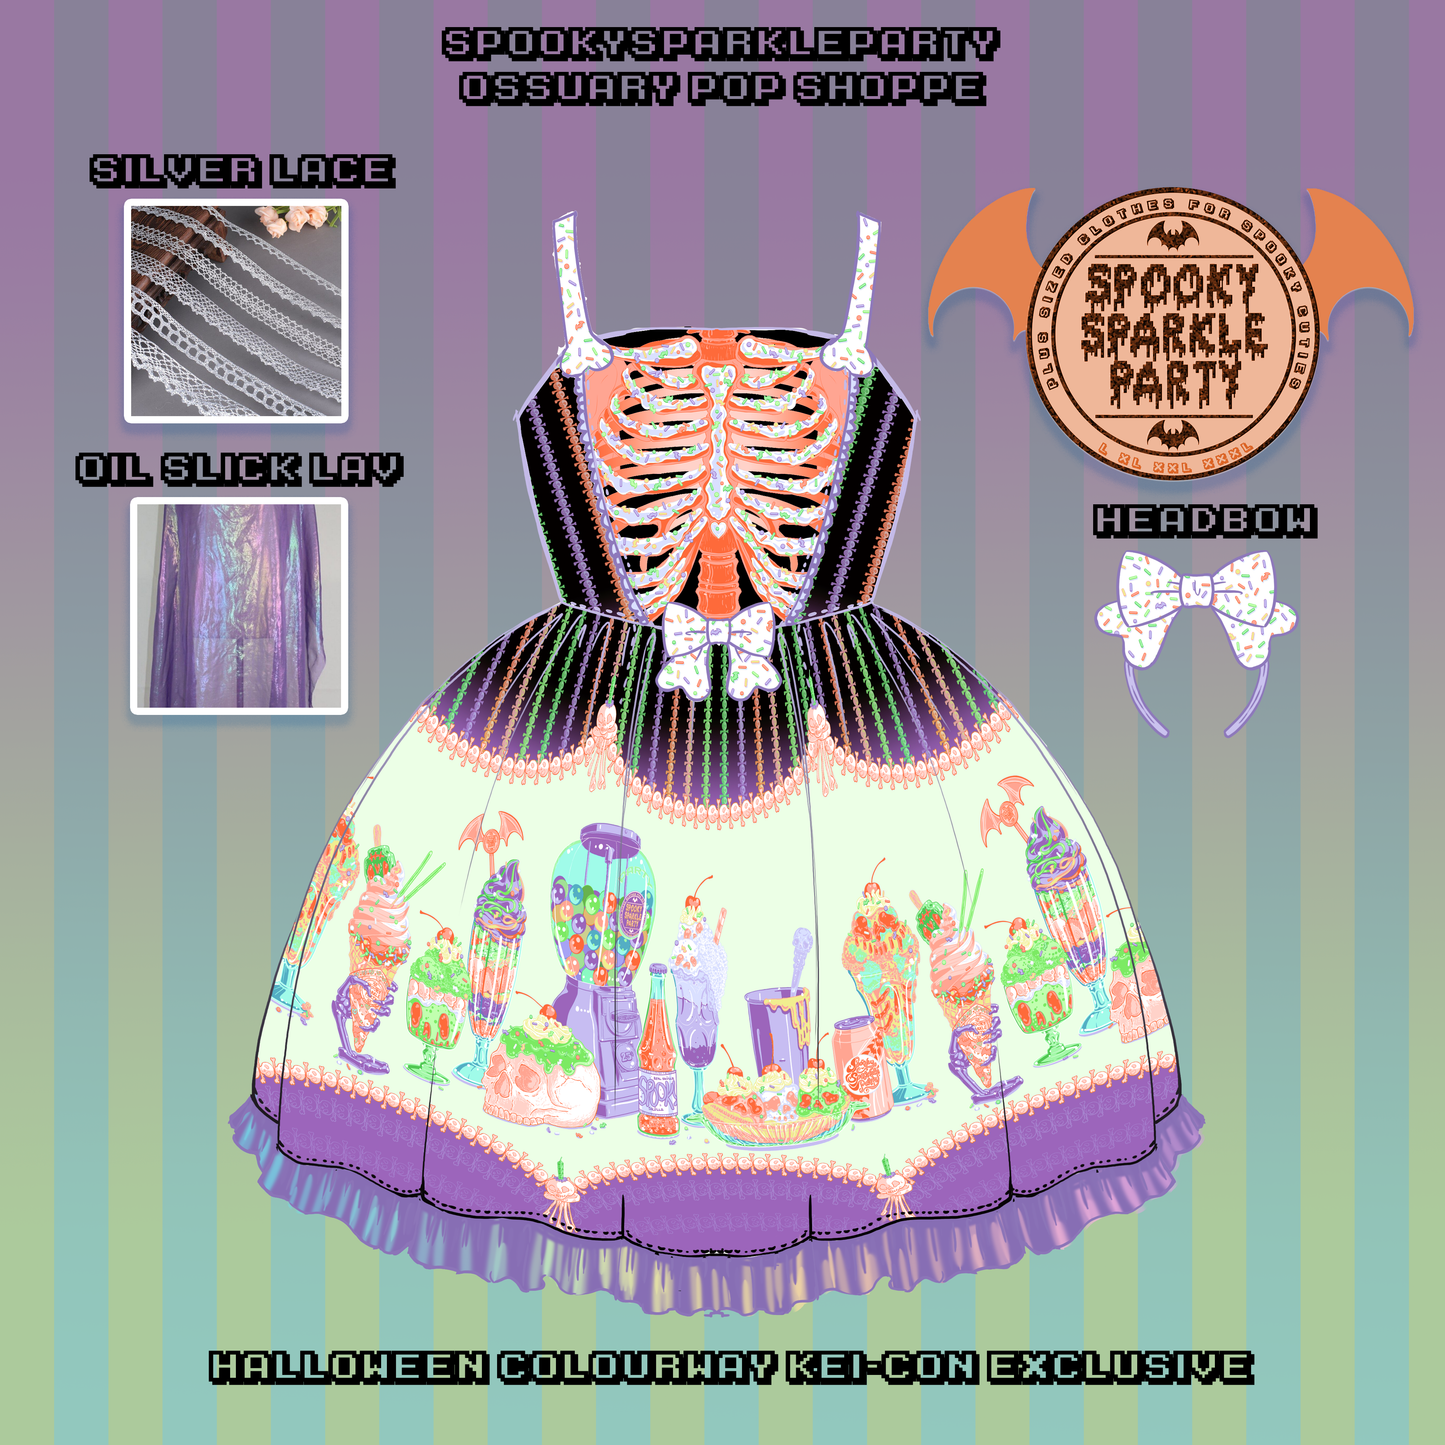 HALLOWEEN Pre-Order Ossuary Pop Shoppe (Kei-Con Exclusive, pickup at Kei-Con)